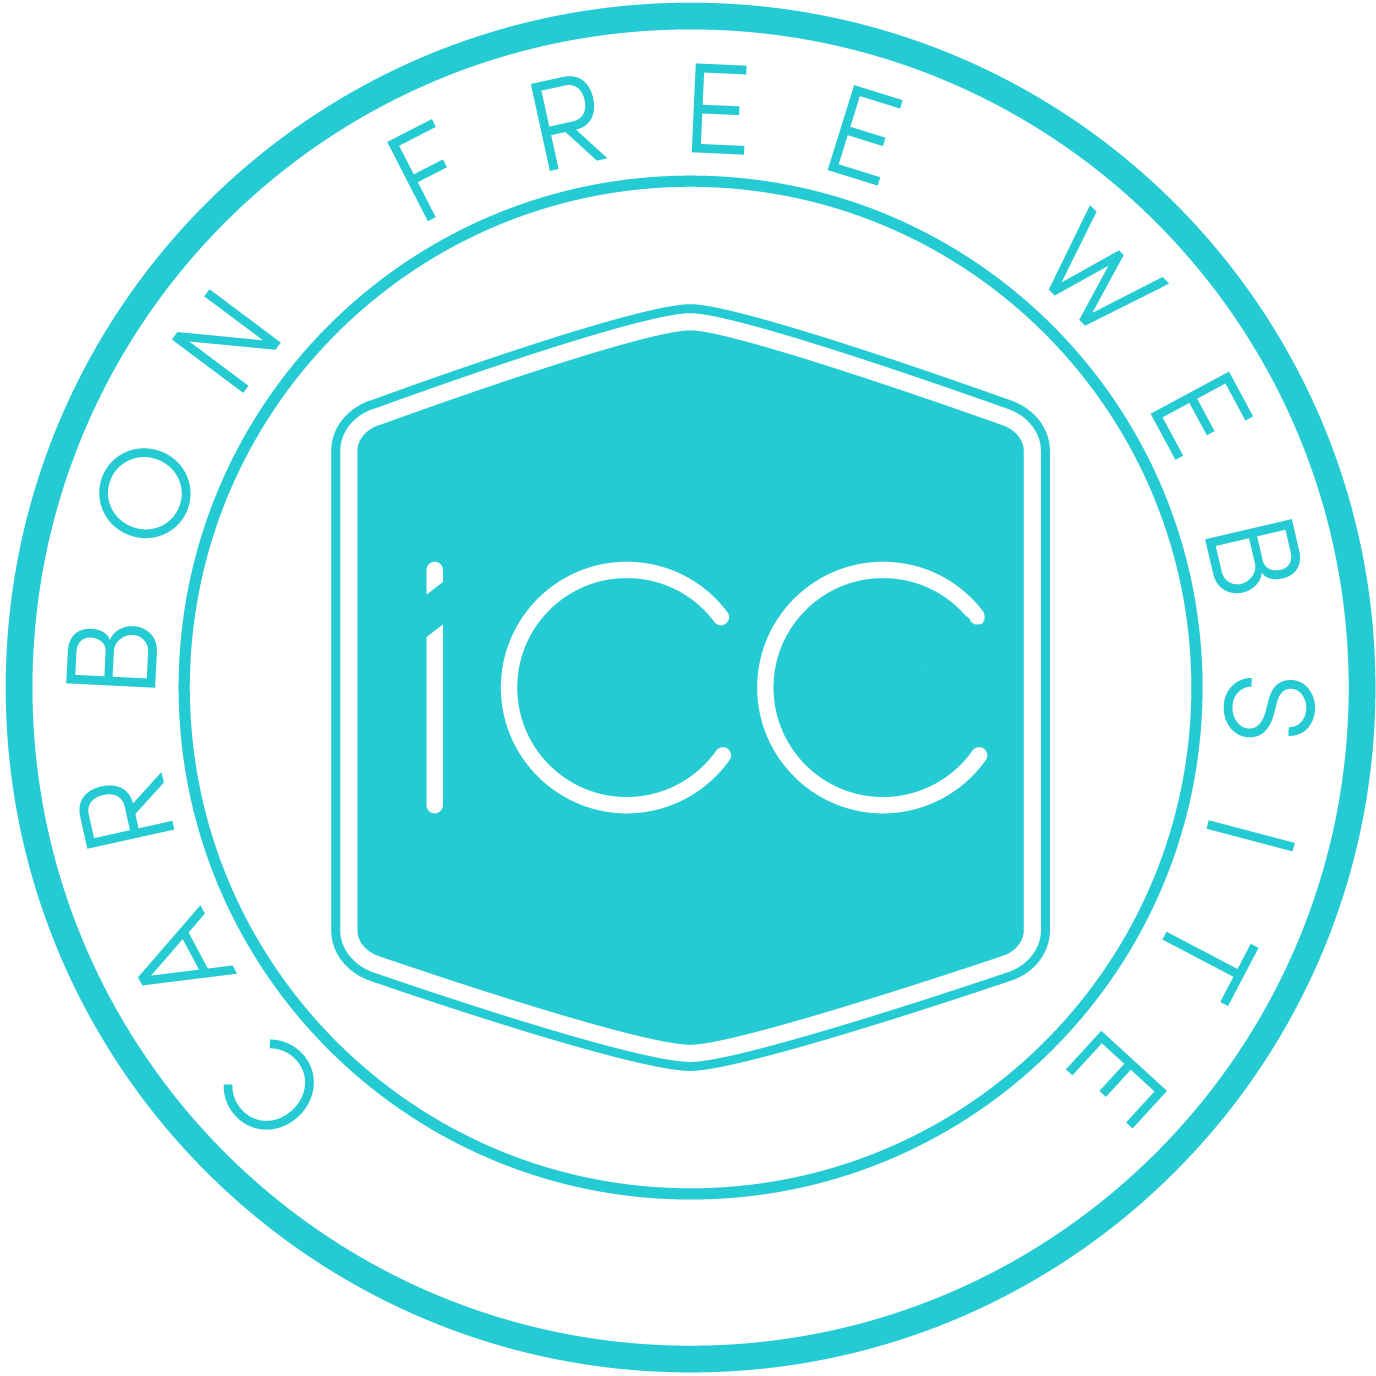 Carbon free